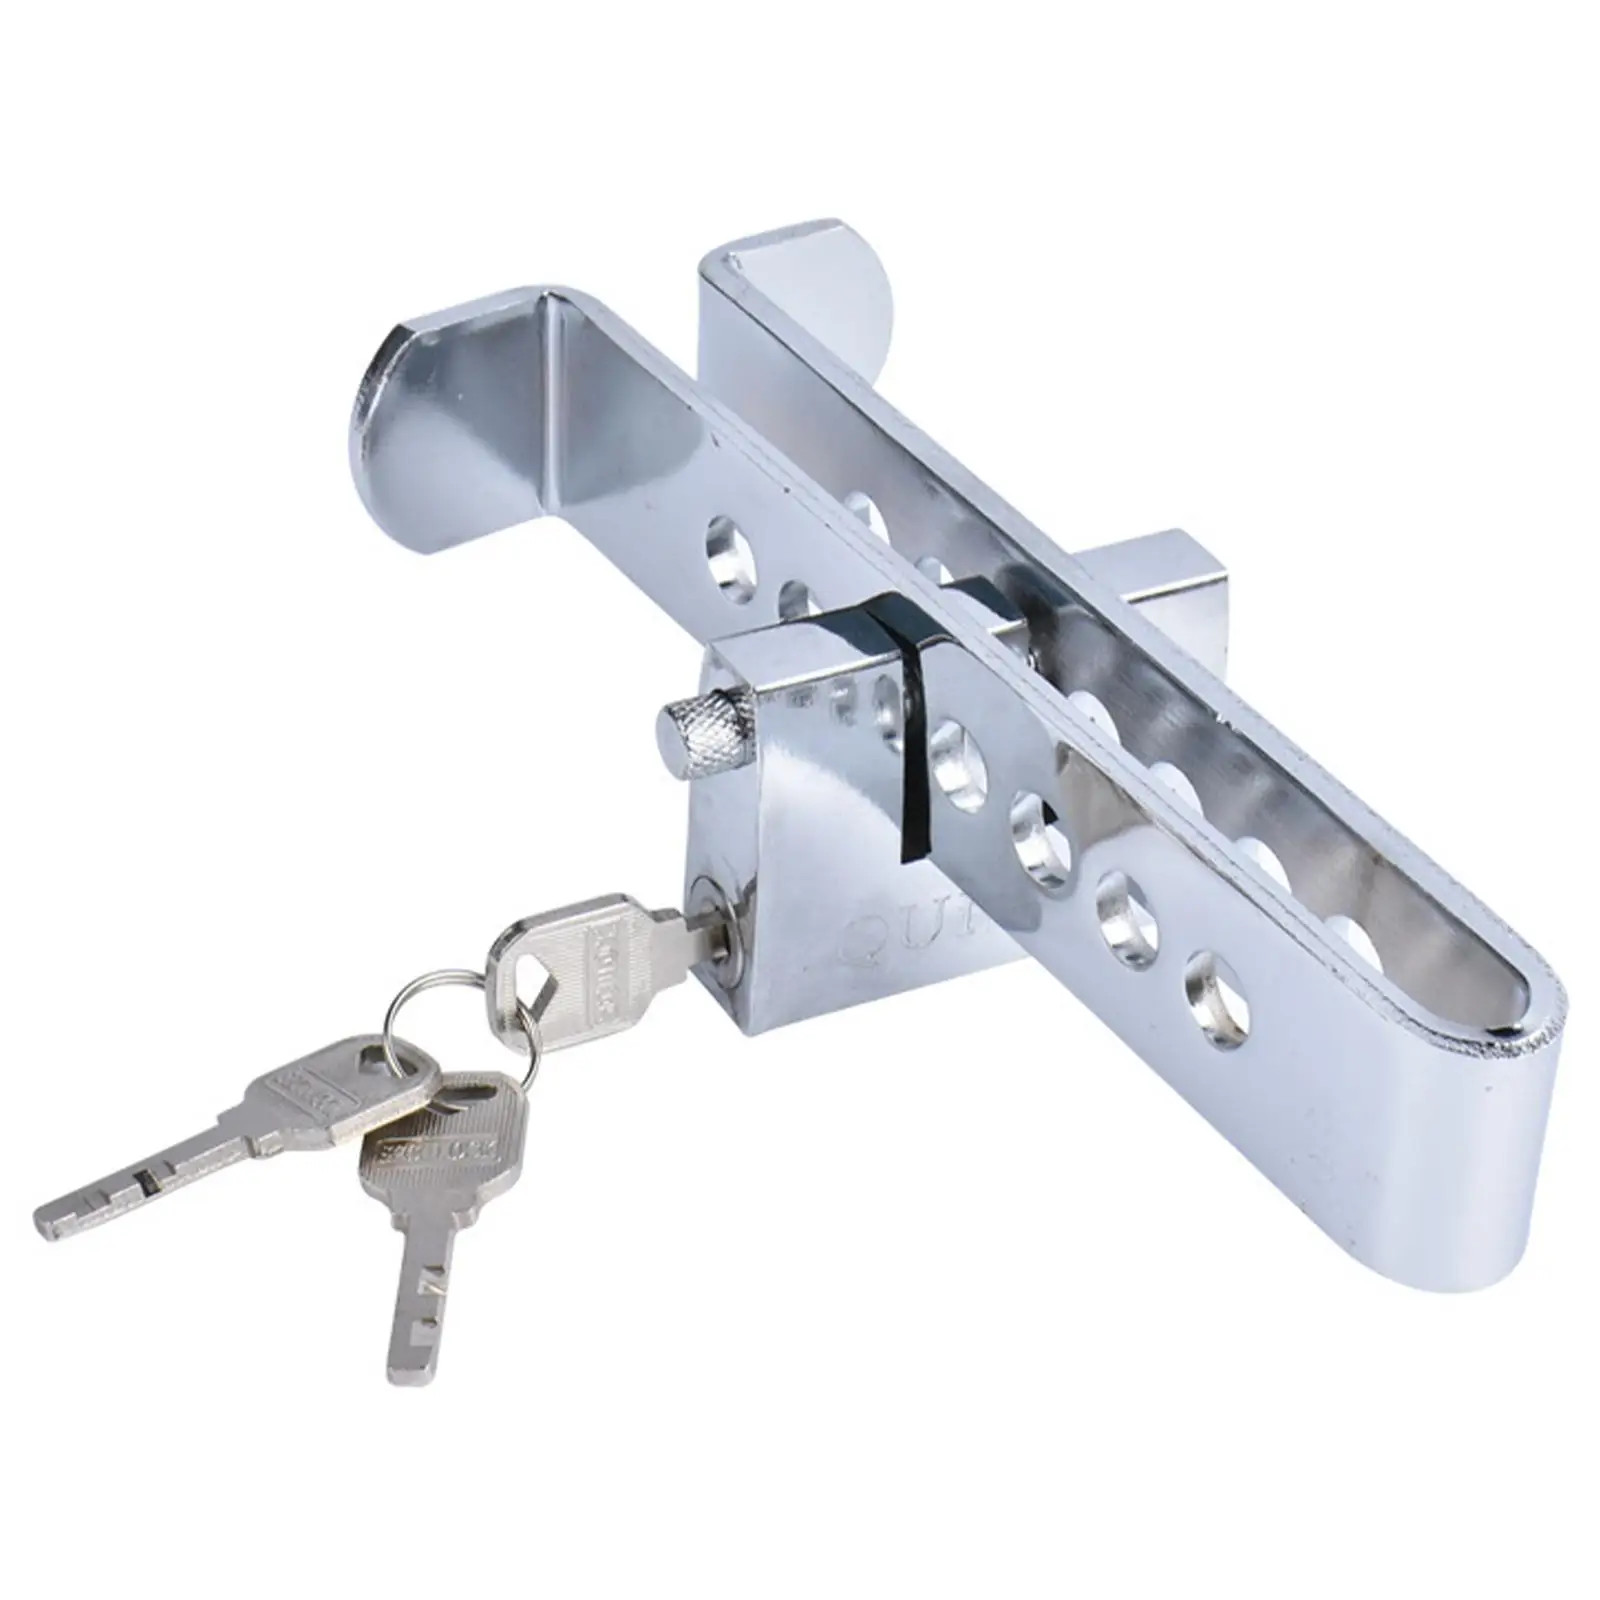 Anti Car Clutch Lock, with , Pedal Lock,  Pedal Lock,  Clutch  Vehicle  Tool